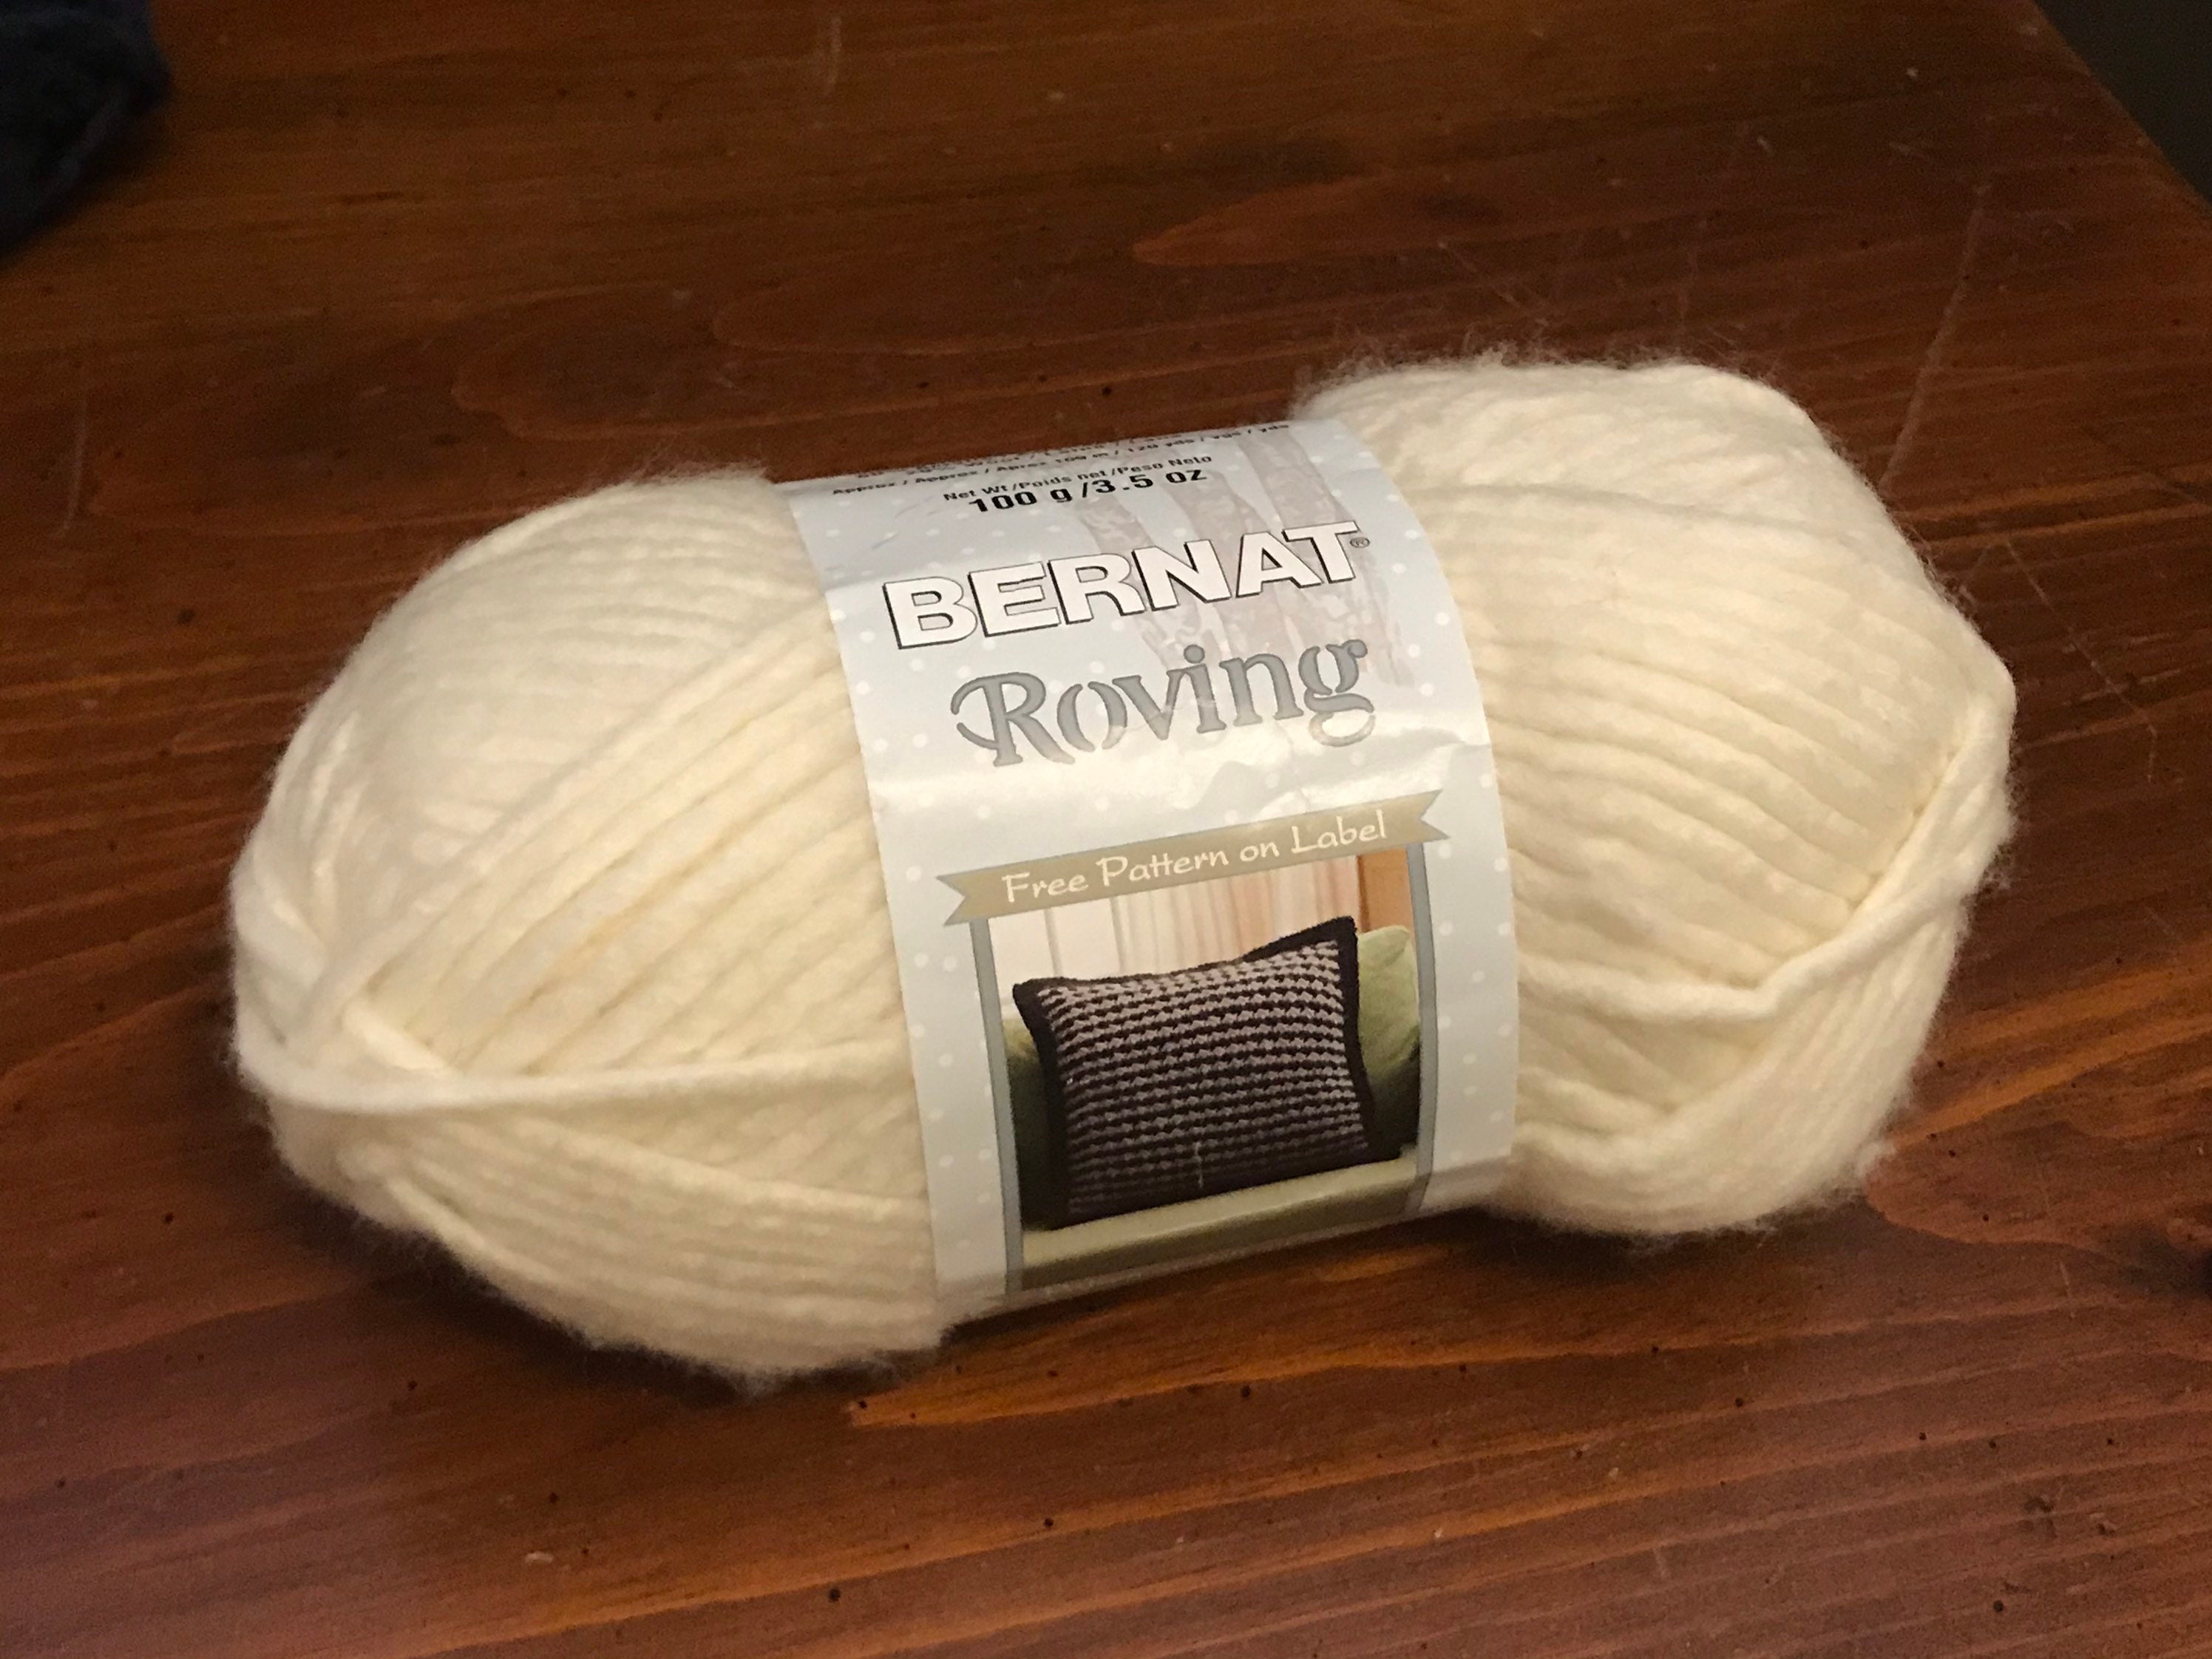 Bernat Roving Yarn - Rice Paper